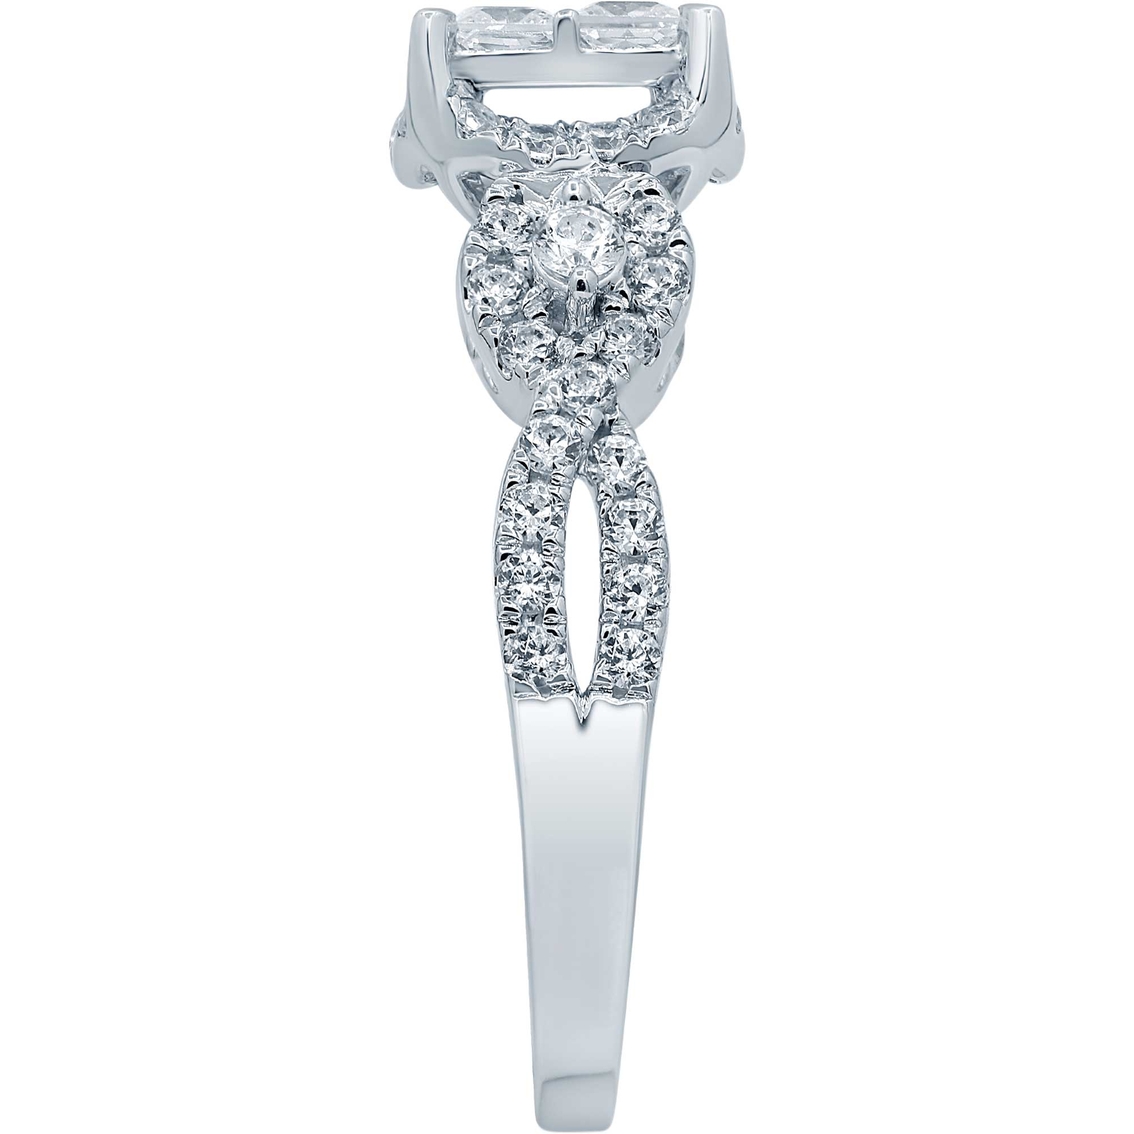 10K White Gold 1 CTW Diamond Engagement Ring - Image 3 of 3